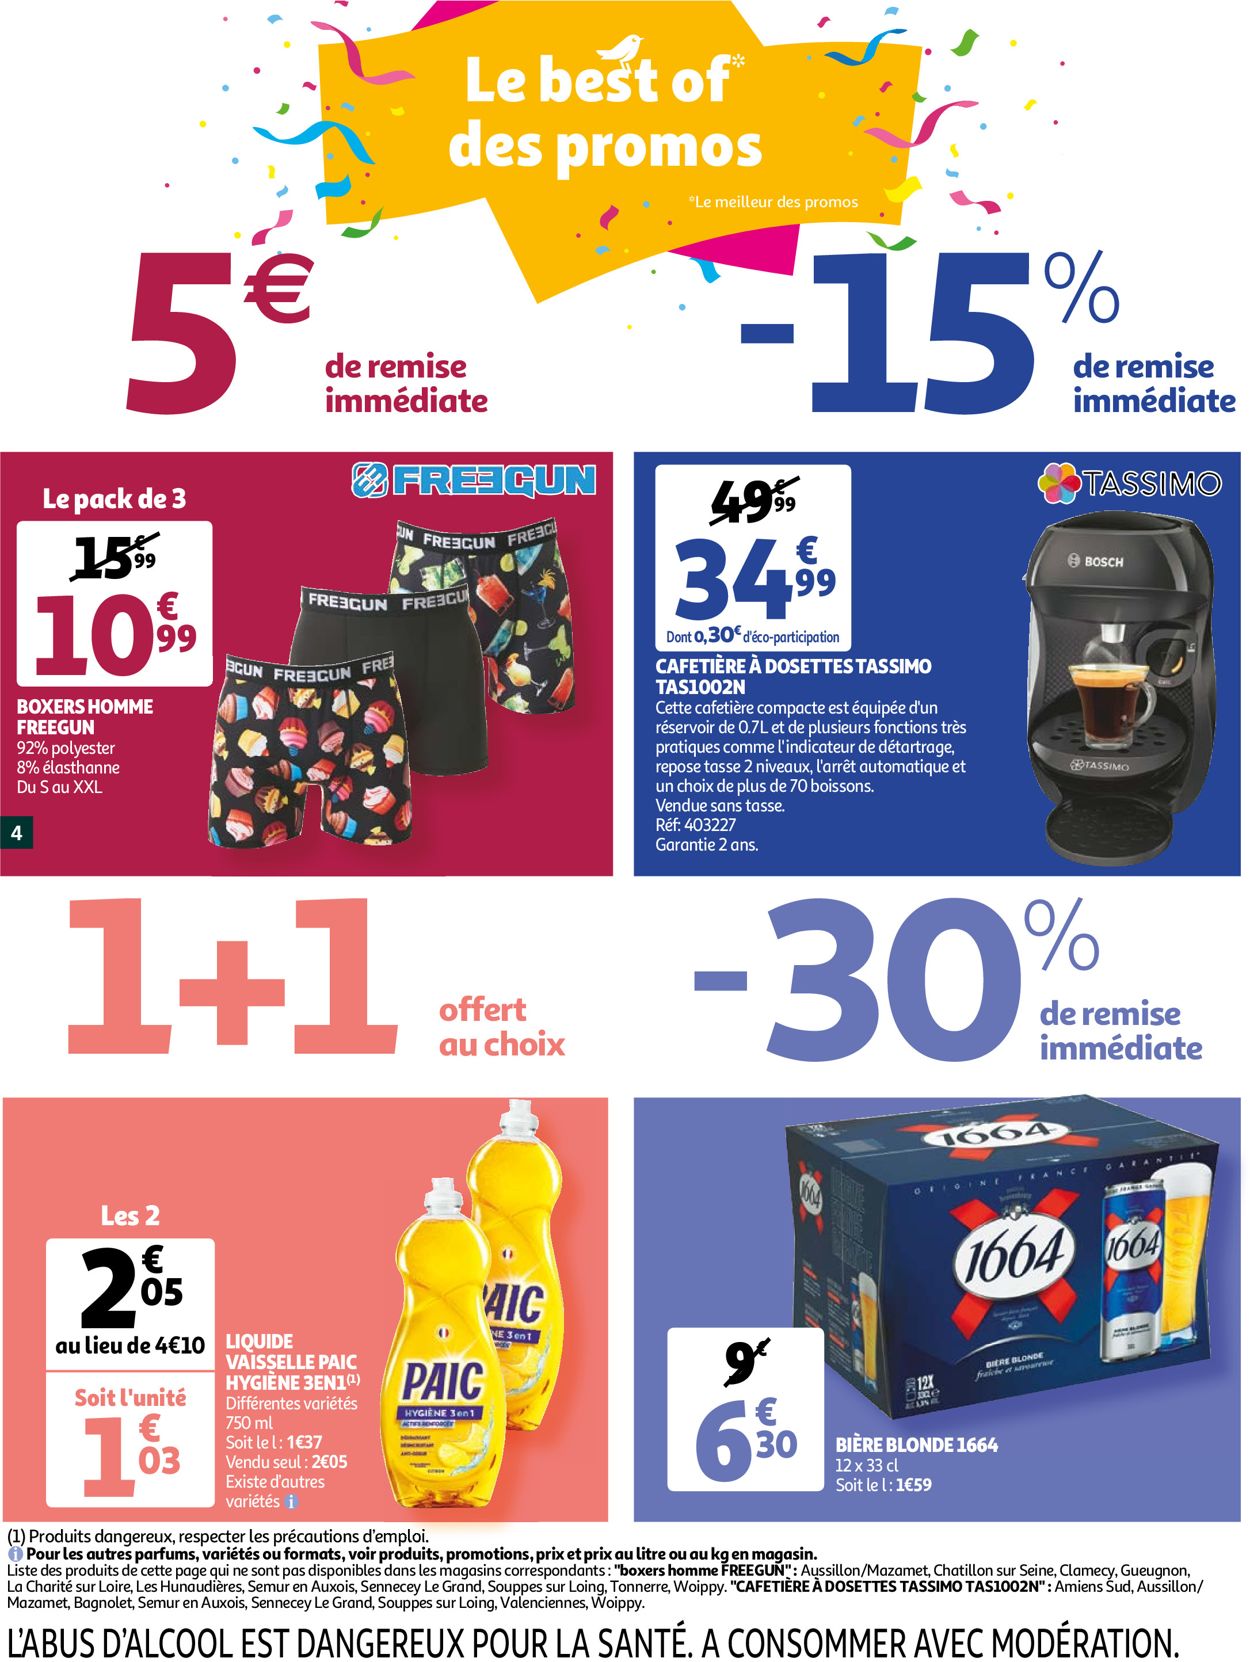 Auchan Catalogue - 03.08-09.08.2022 (Page 4)